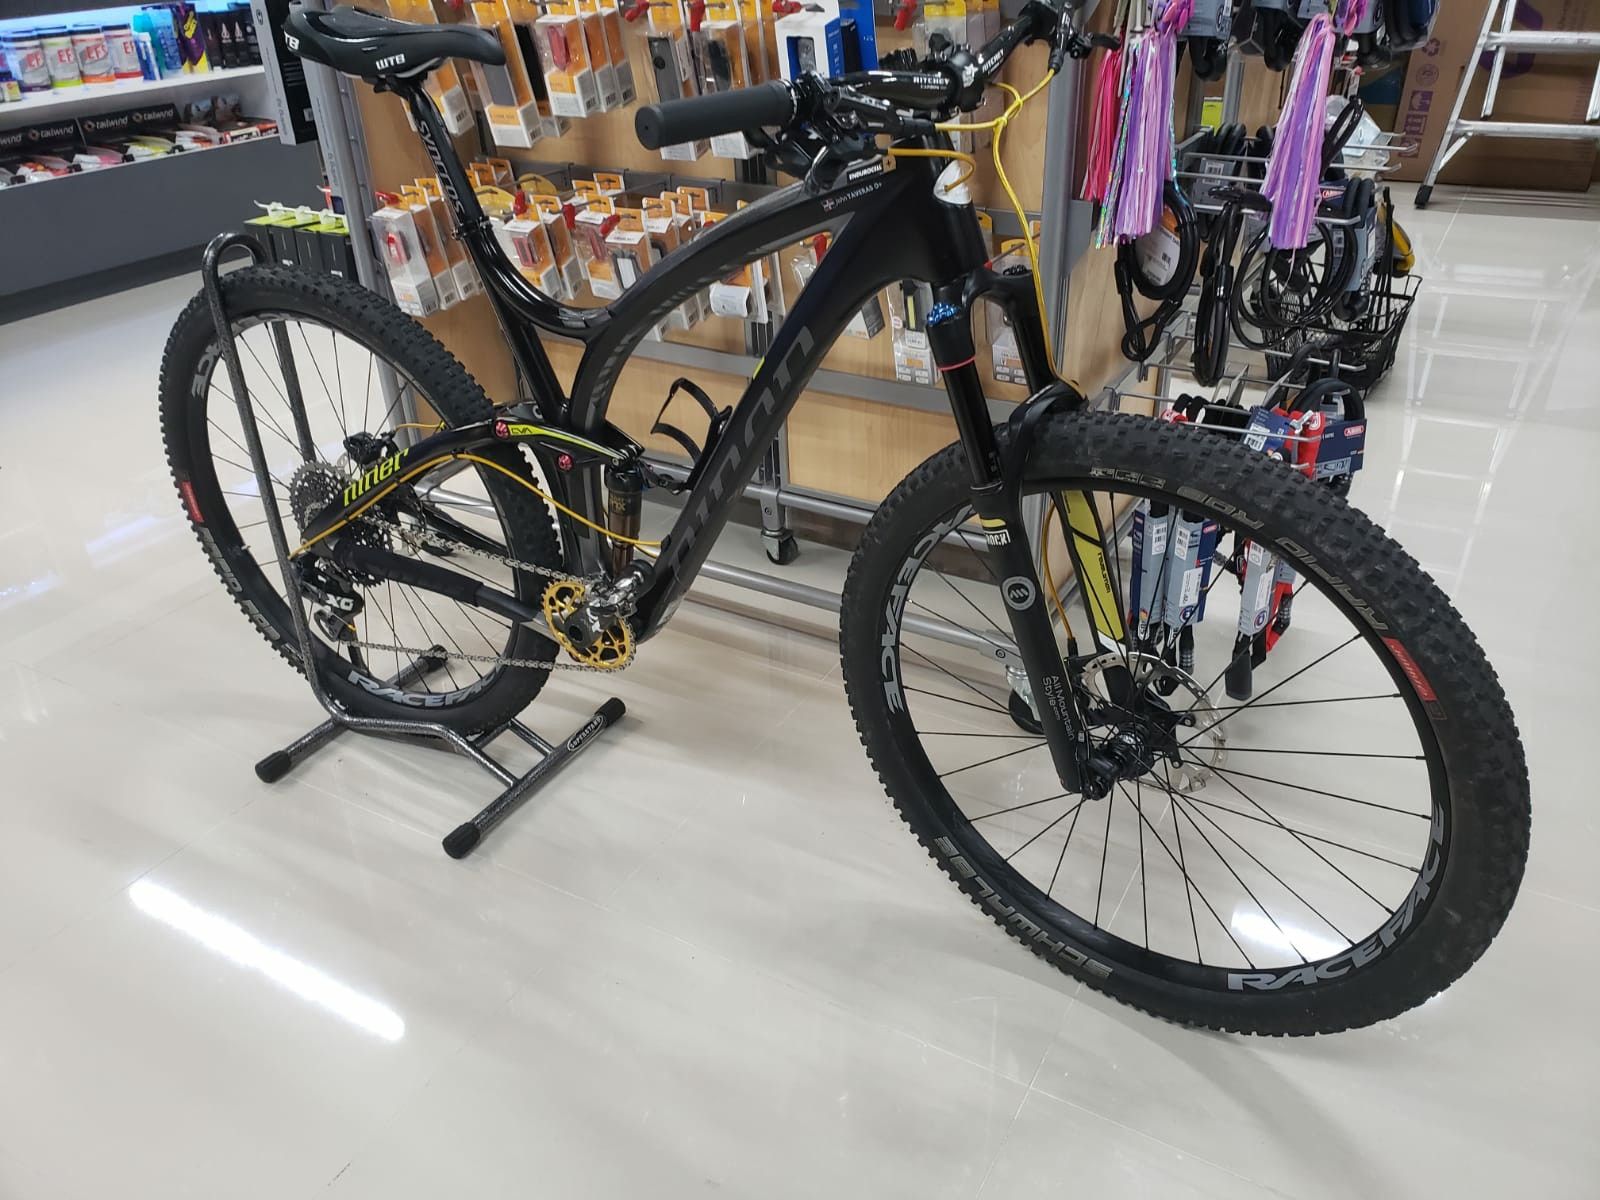 Niner carbon fiber full suspension mountain bike.